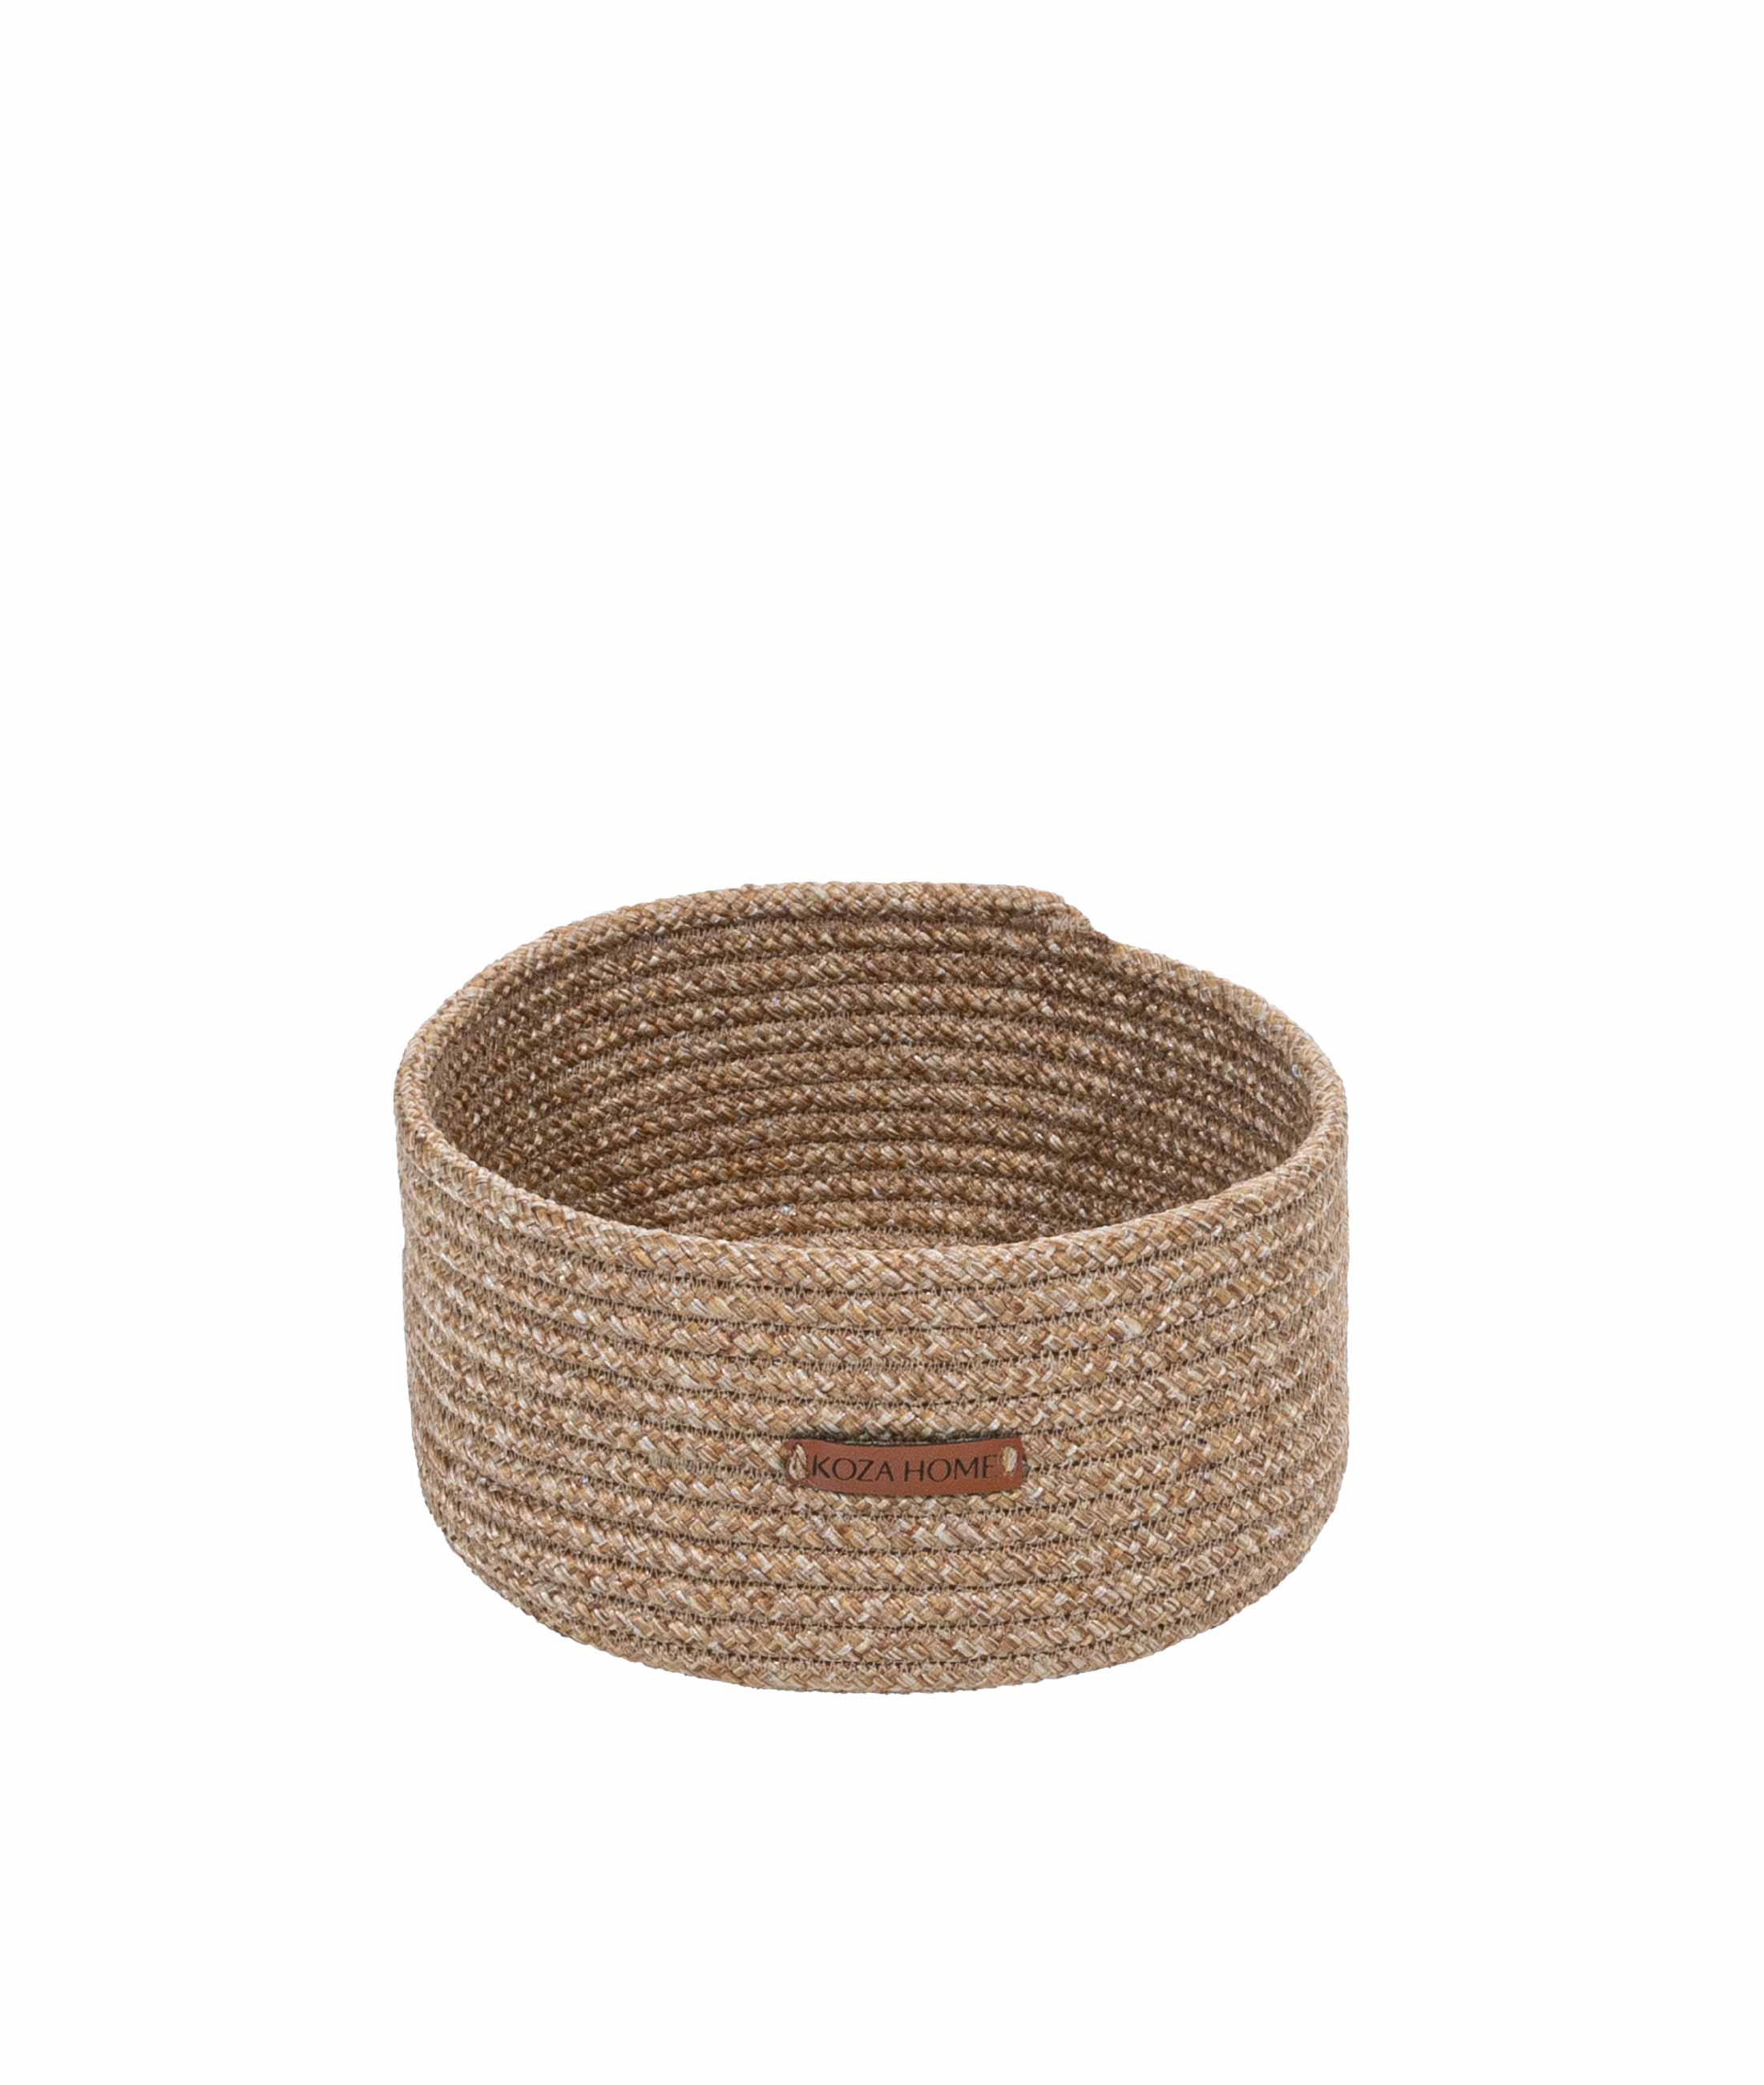 Cesta Handmade Cotton Natural Wicker Decorative Basket 25cm